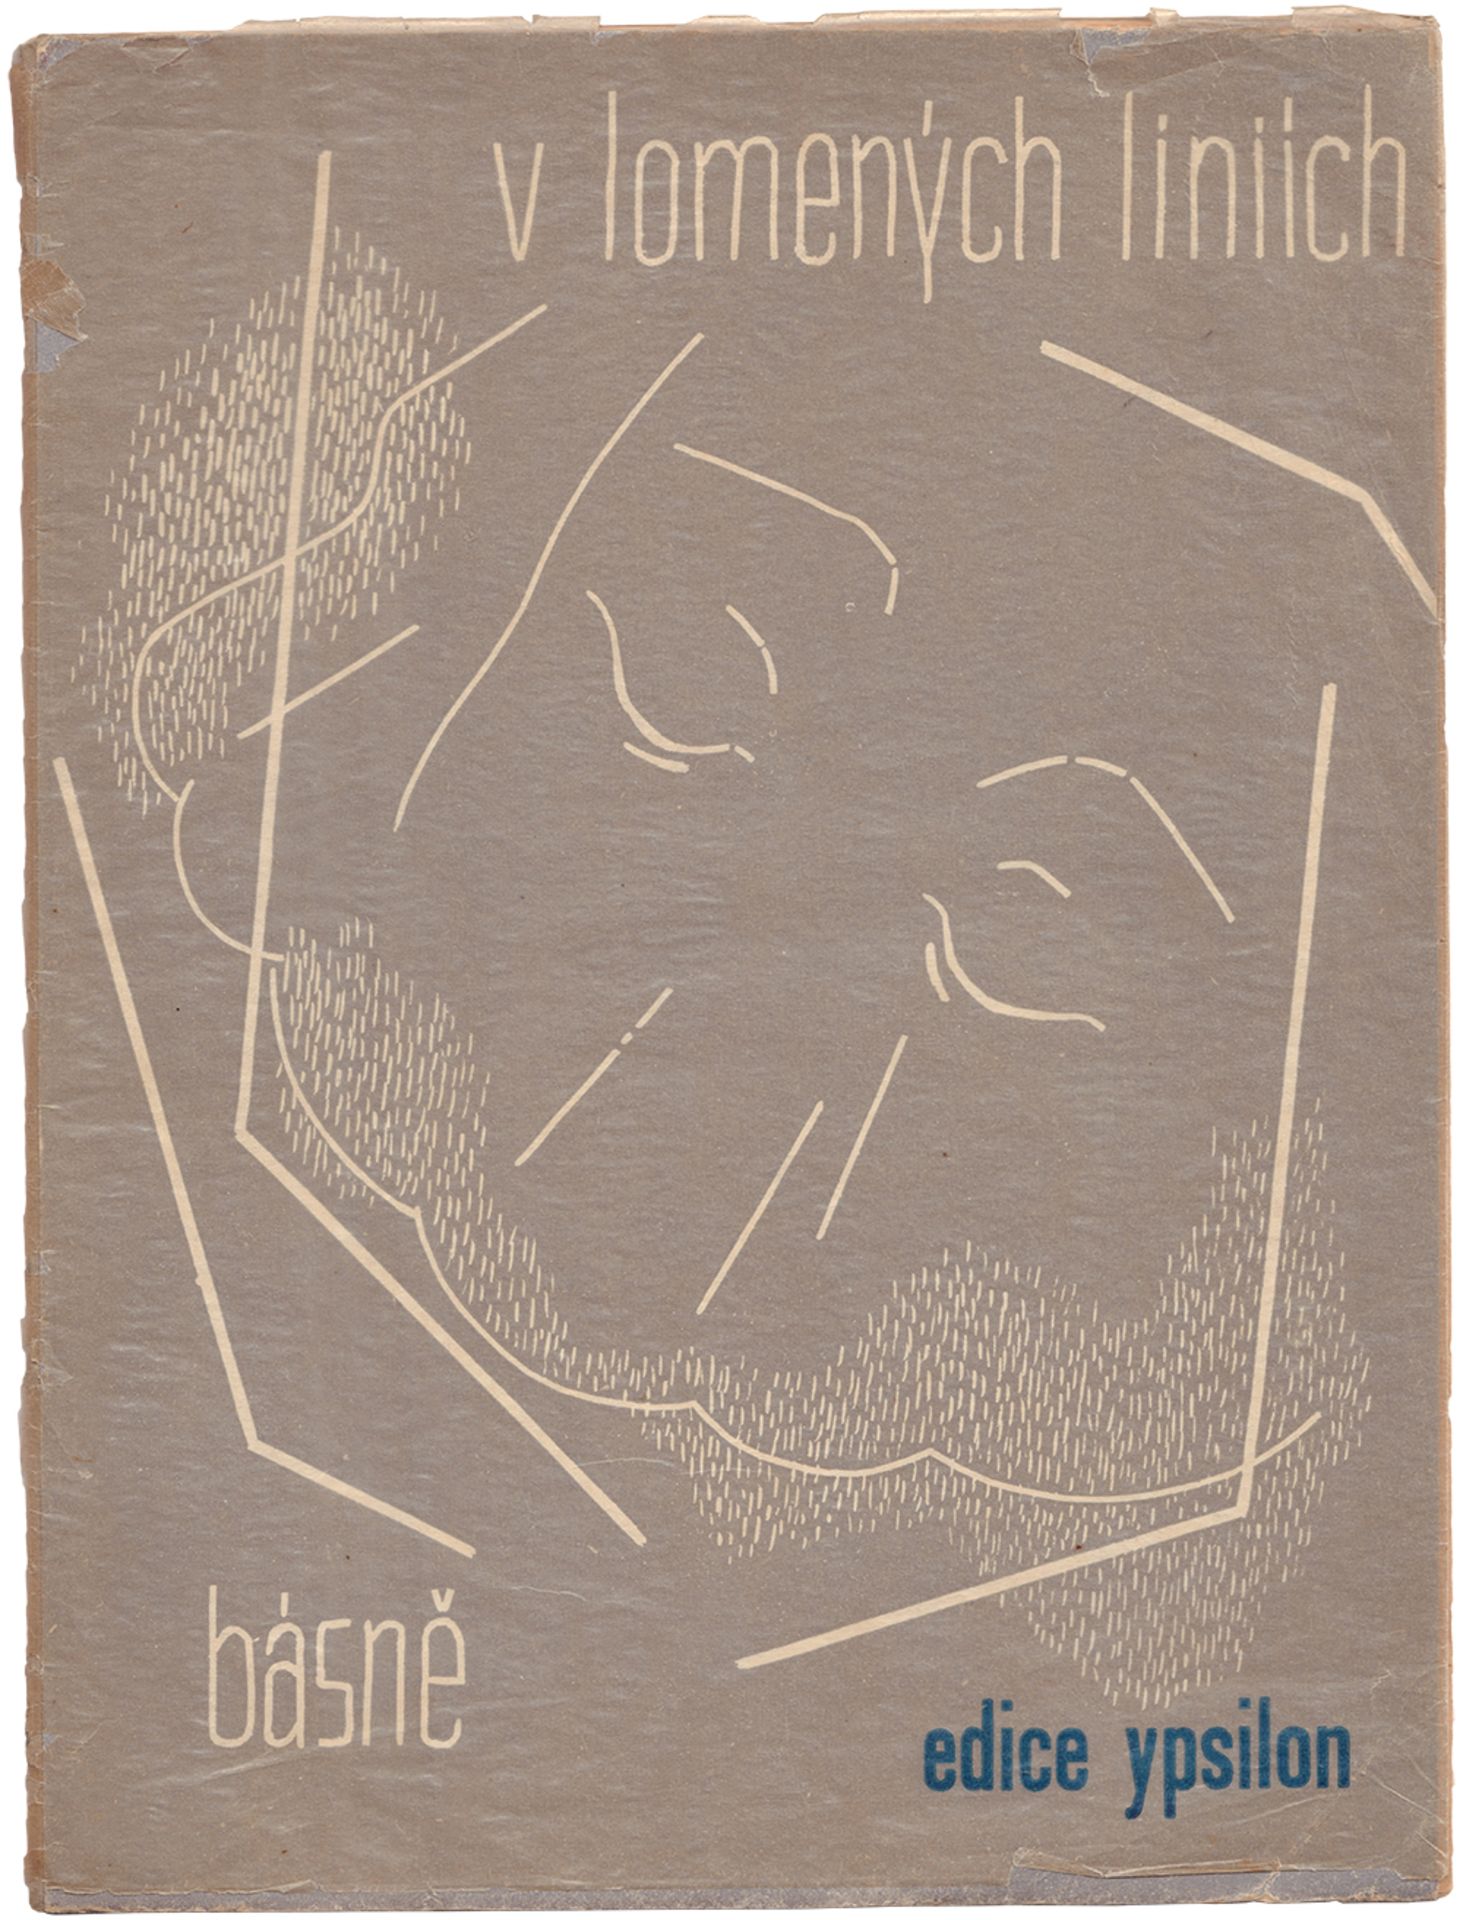 [Czech avant-garde]. ?mrkov?, M. V lomenych liniich. [Prague: Ypsilon, 1932. - 52 pp.: ill.; 24,5x18